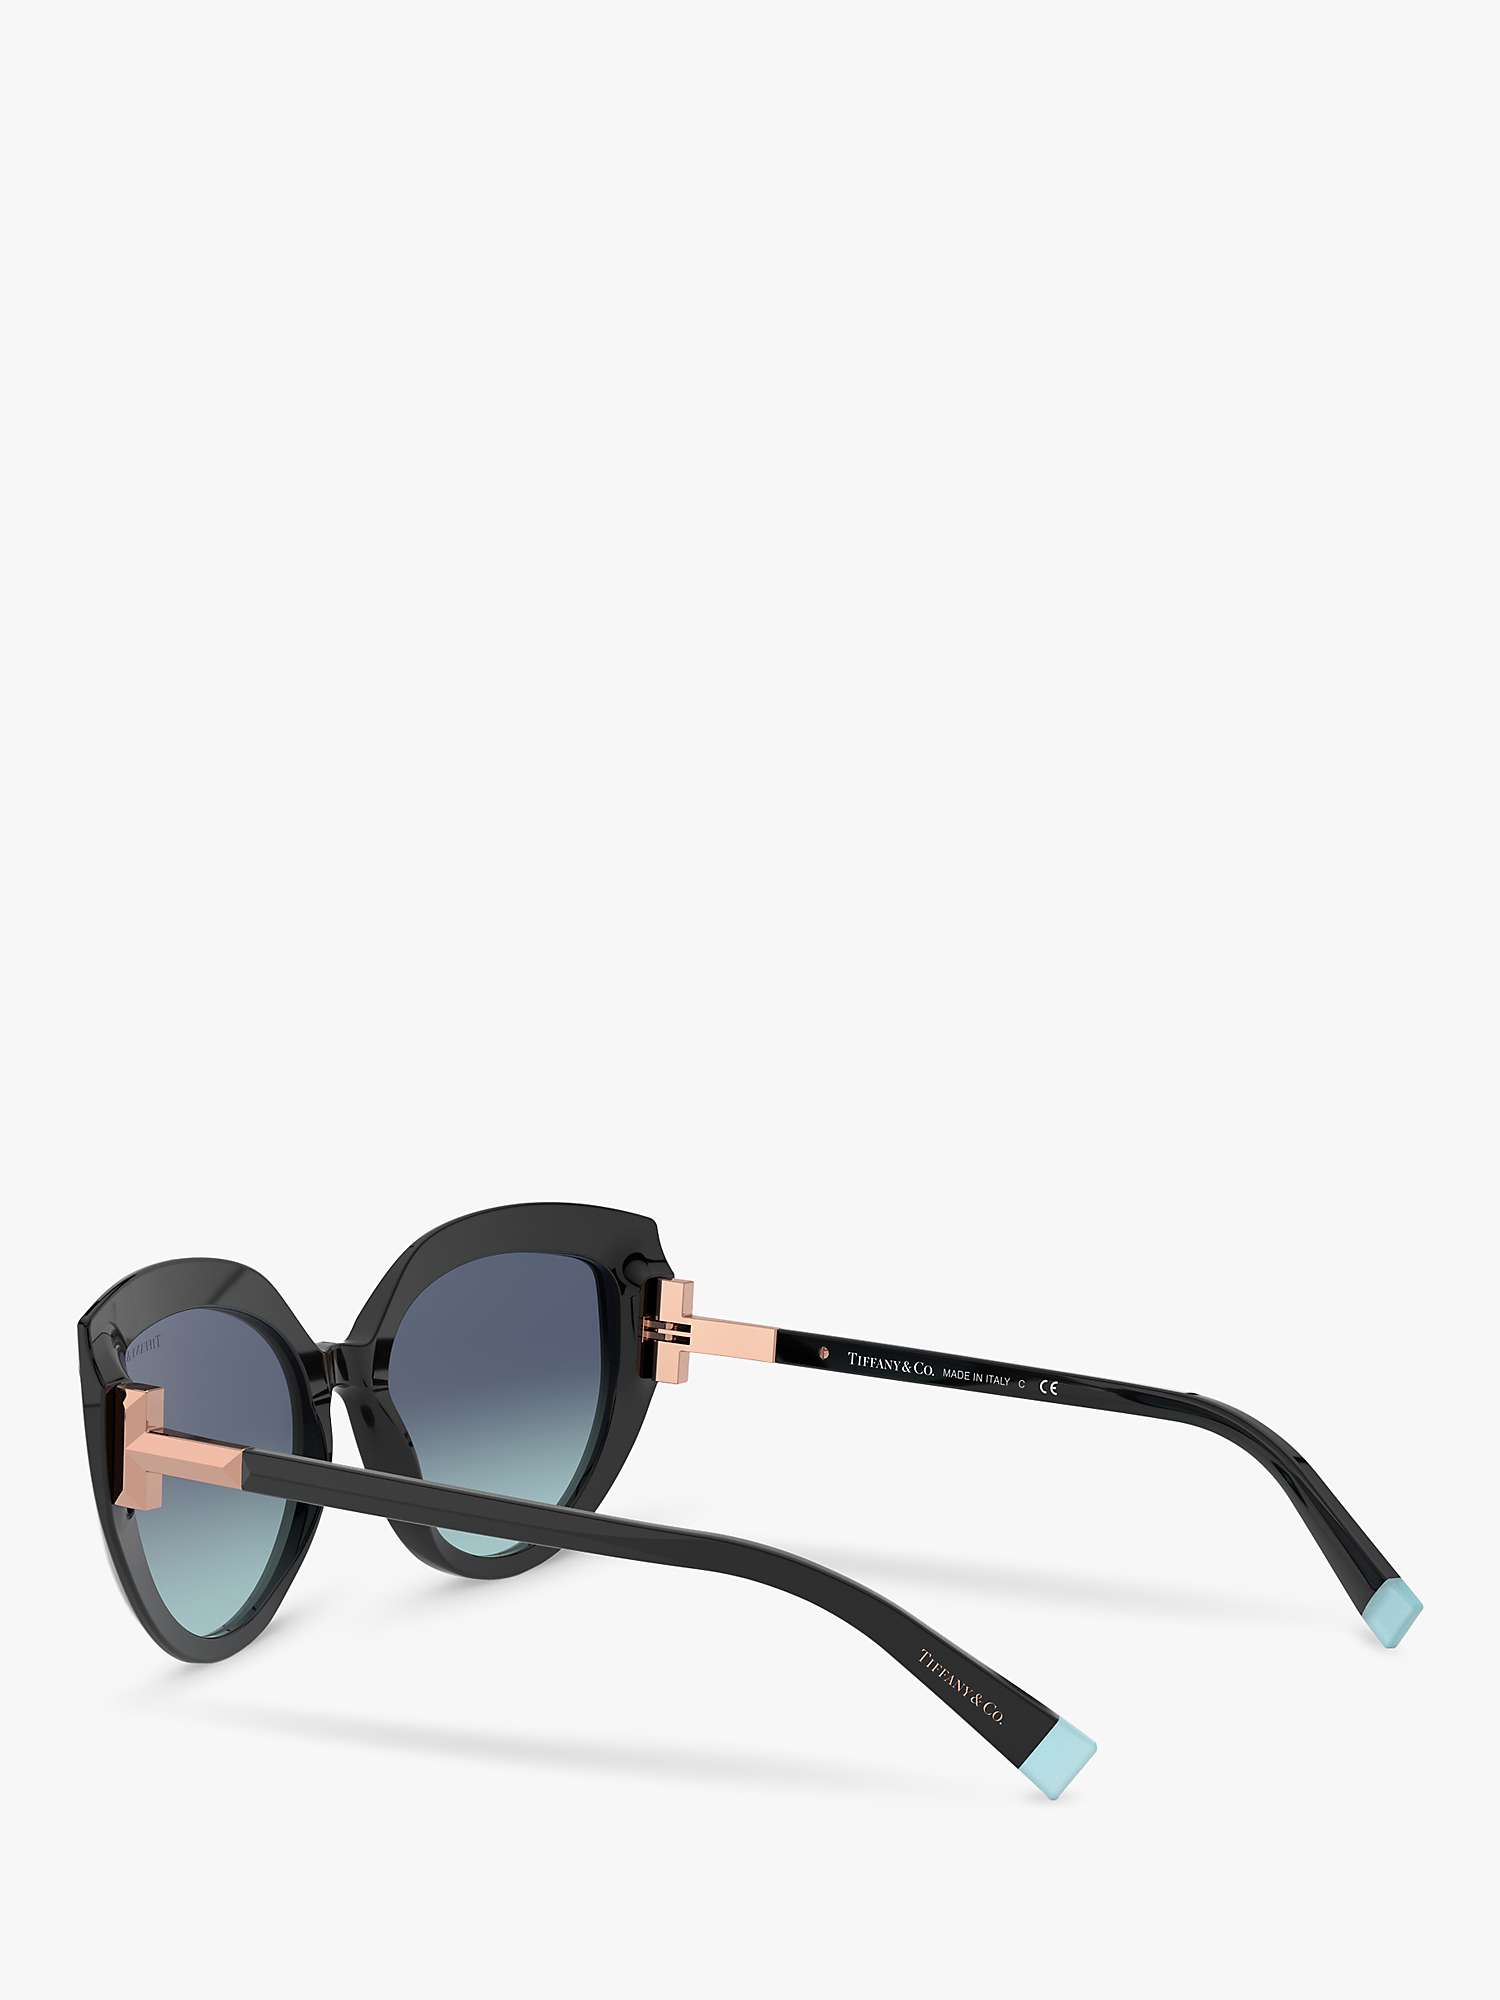 Buy Tiffany & Co TF4170 Women's Cat's Eye Sunglasses, Black/Blue Gradient Online at johnlewis.com